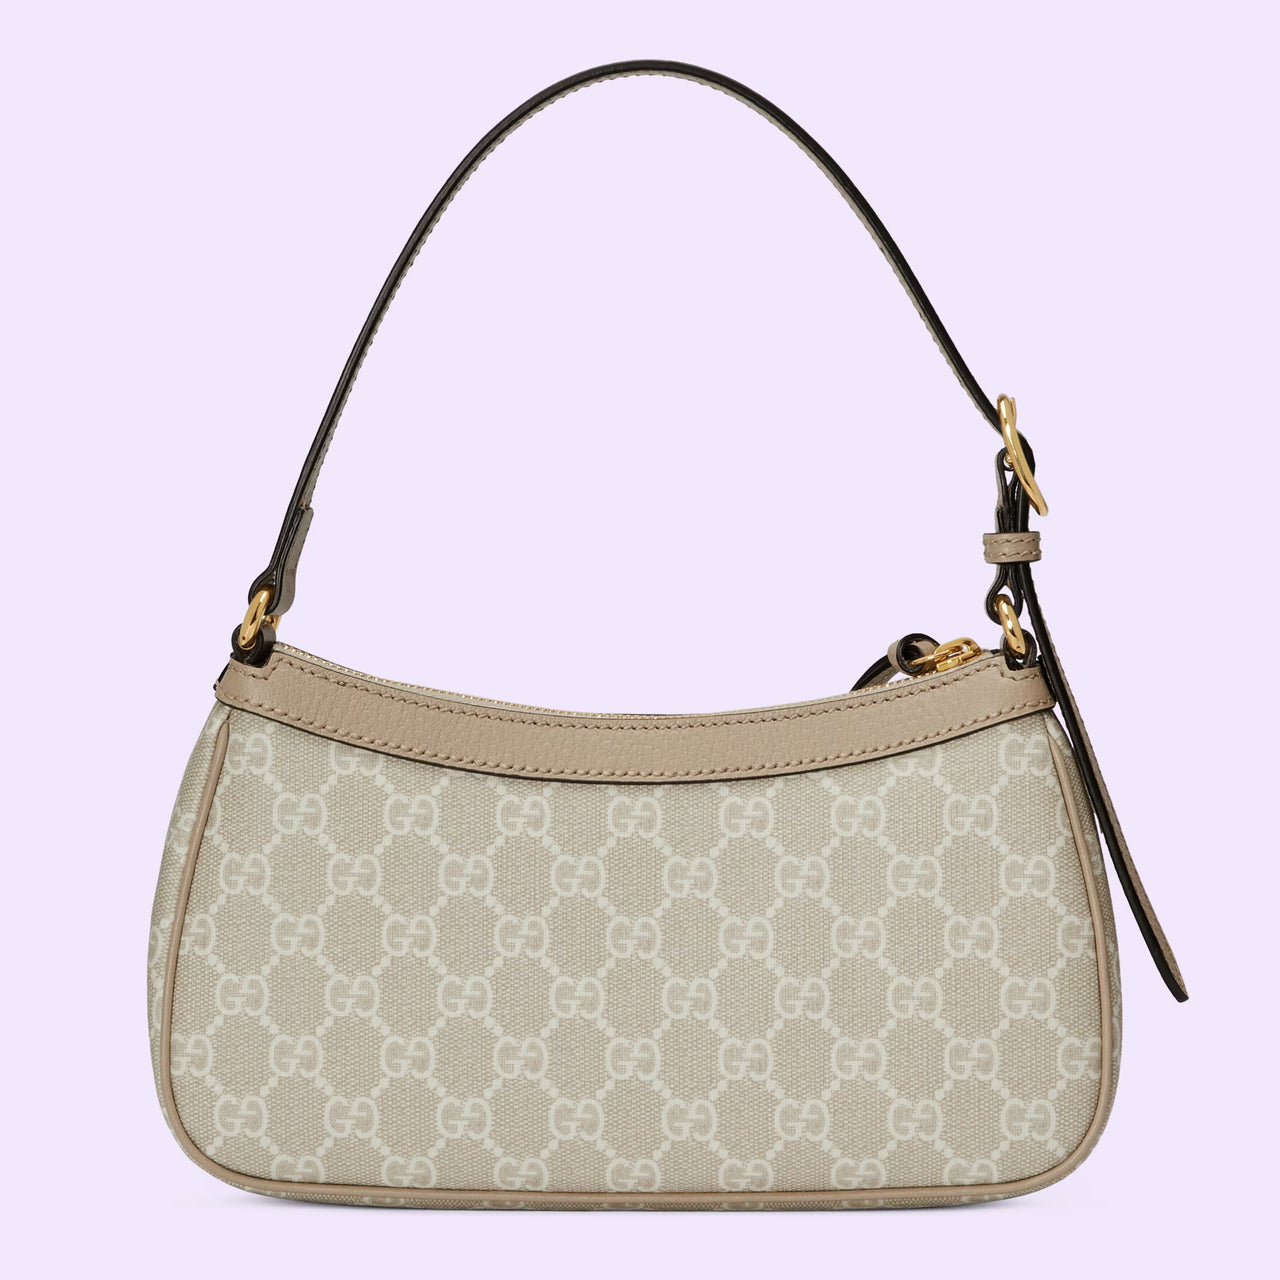 Gucci Ophidia Small Handbag (Beige & White)